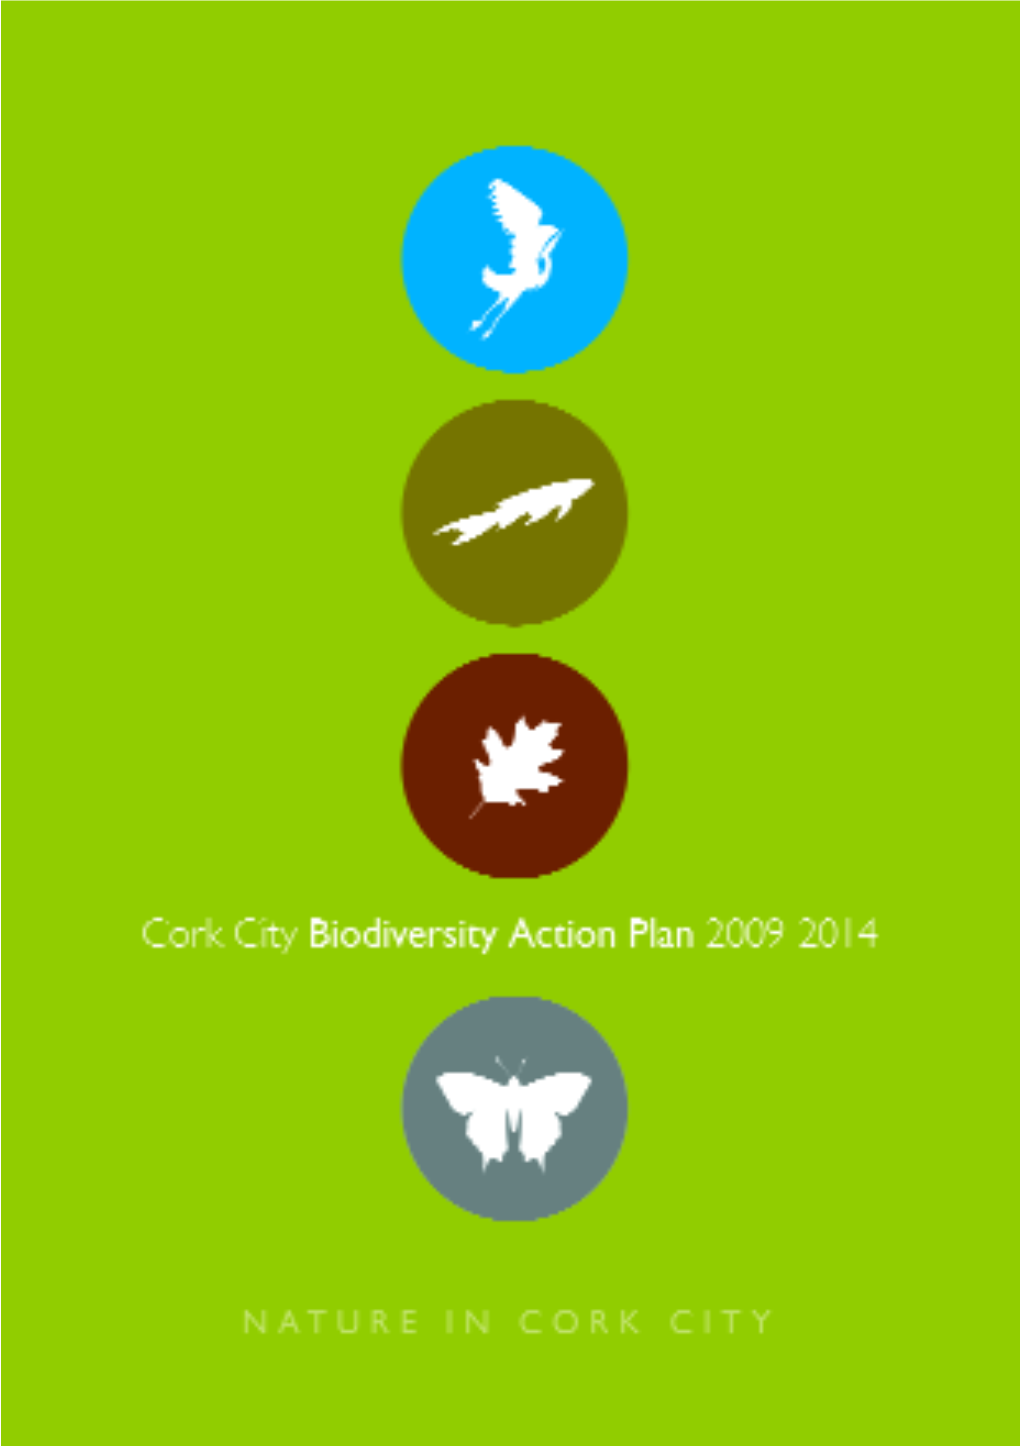 Cork City's Biodiversity Action Plan